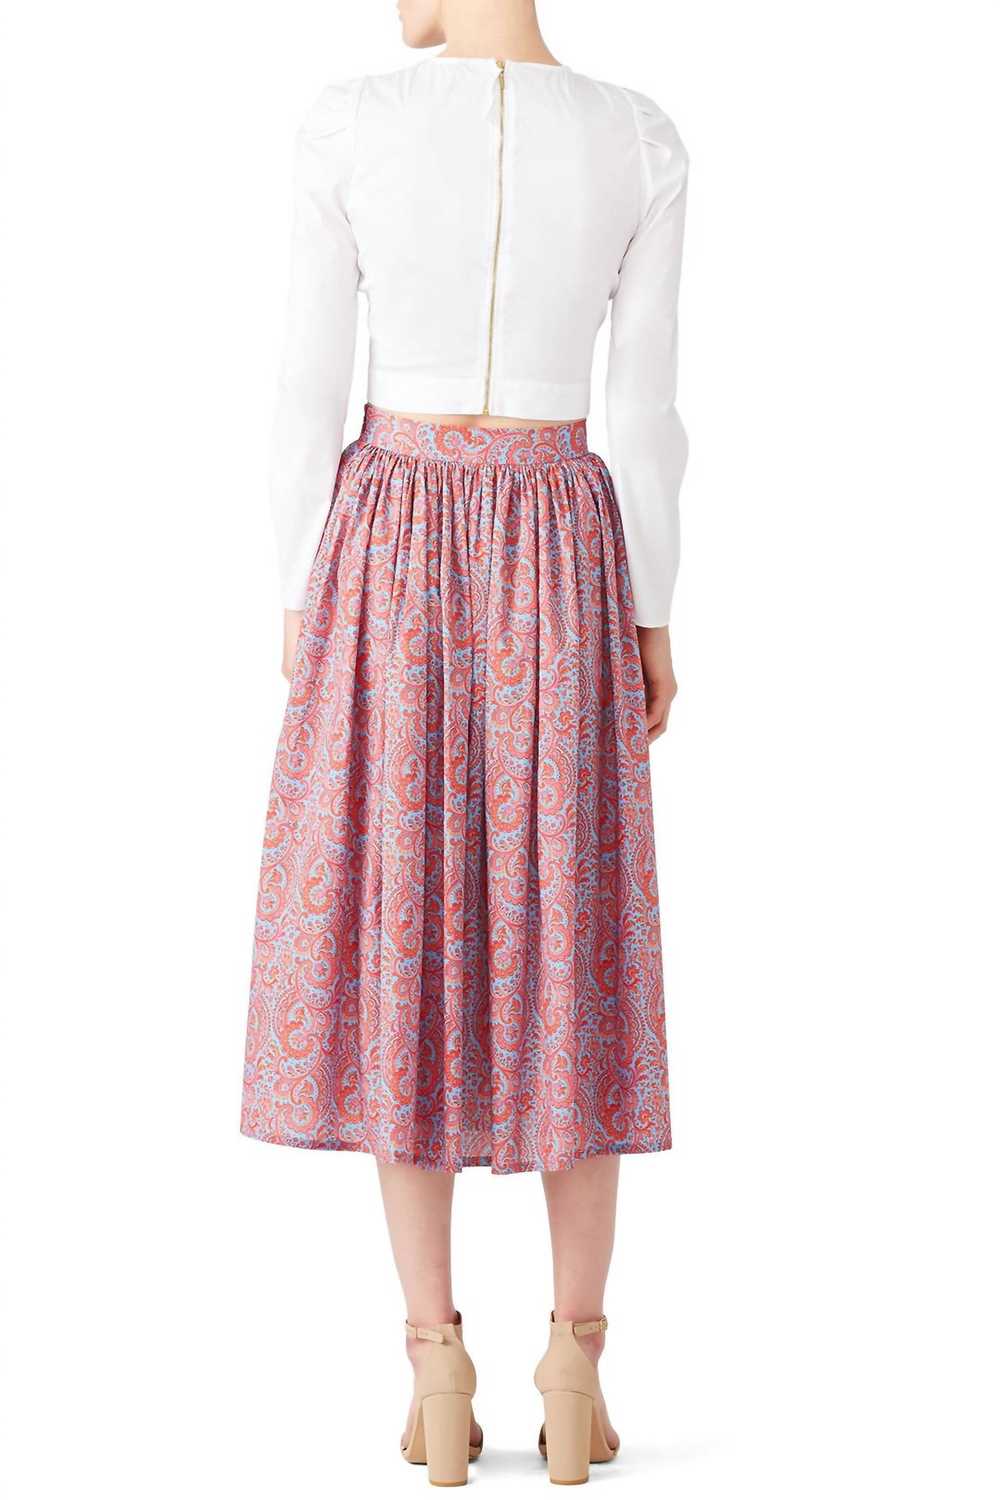 Alcoolique pre-loved mafalda midi skirt for women - image 2